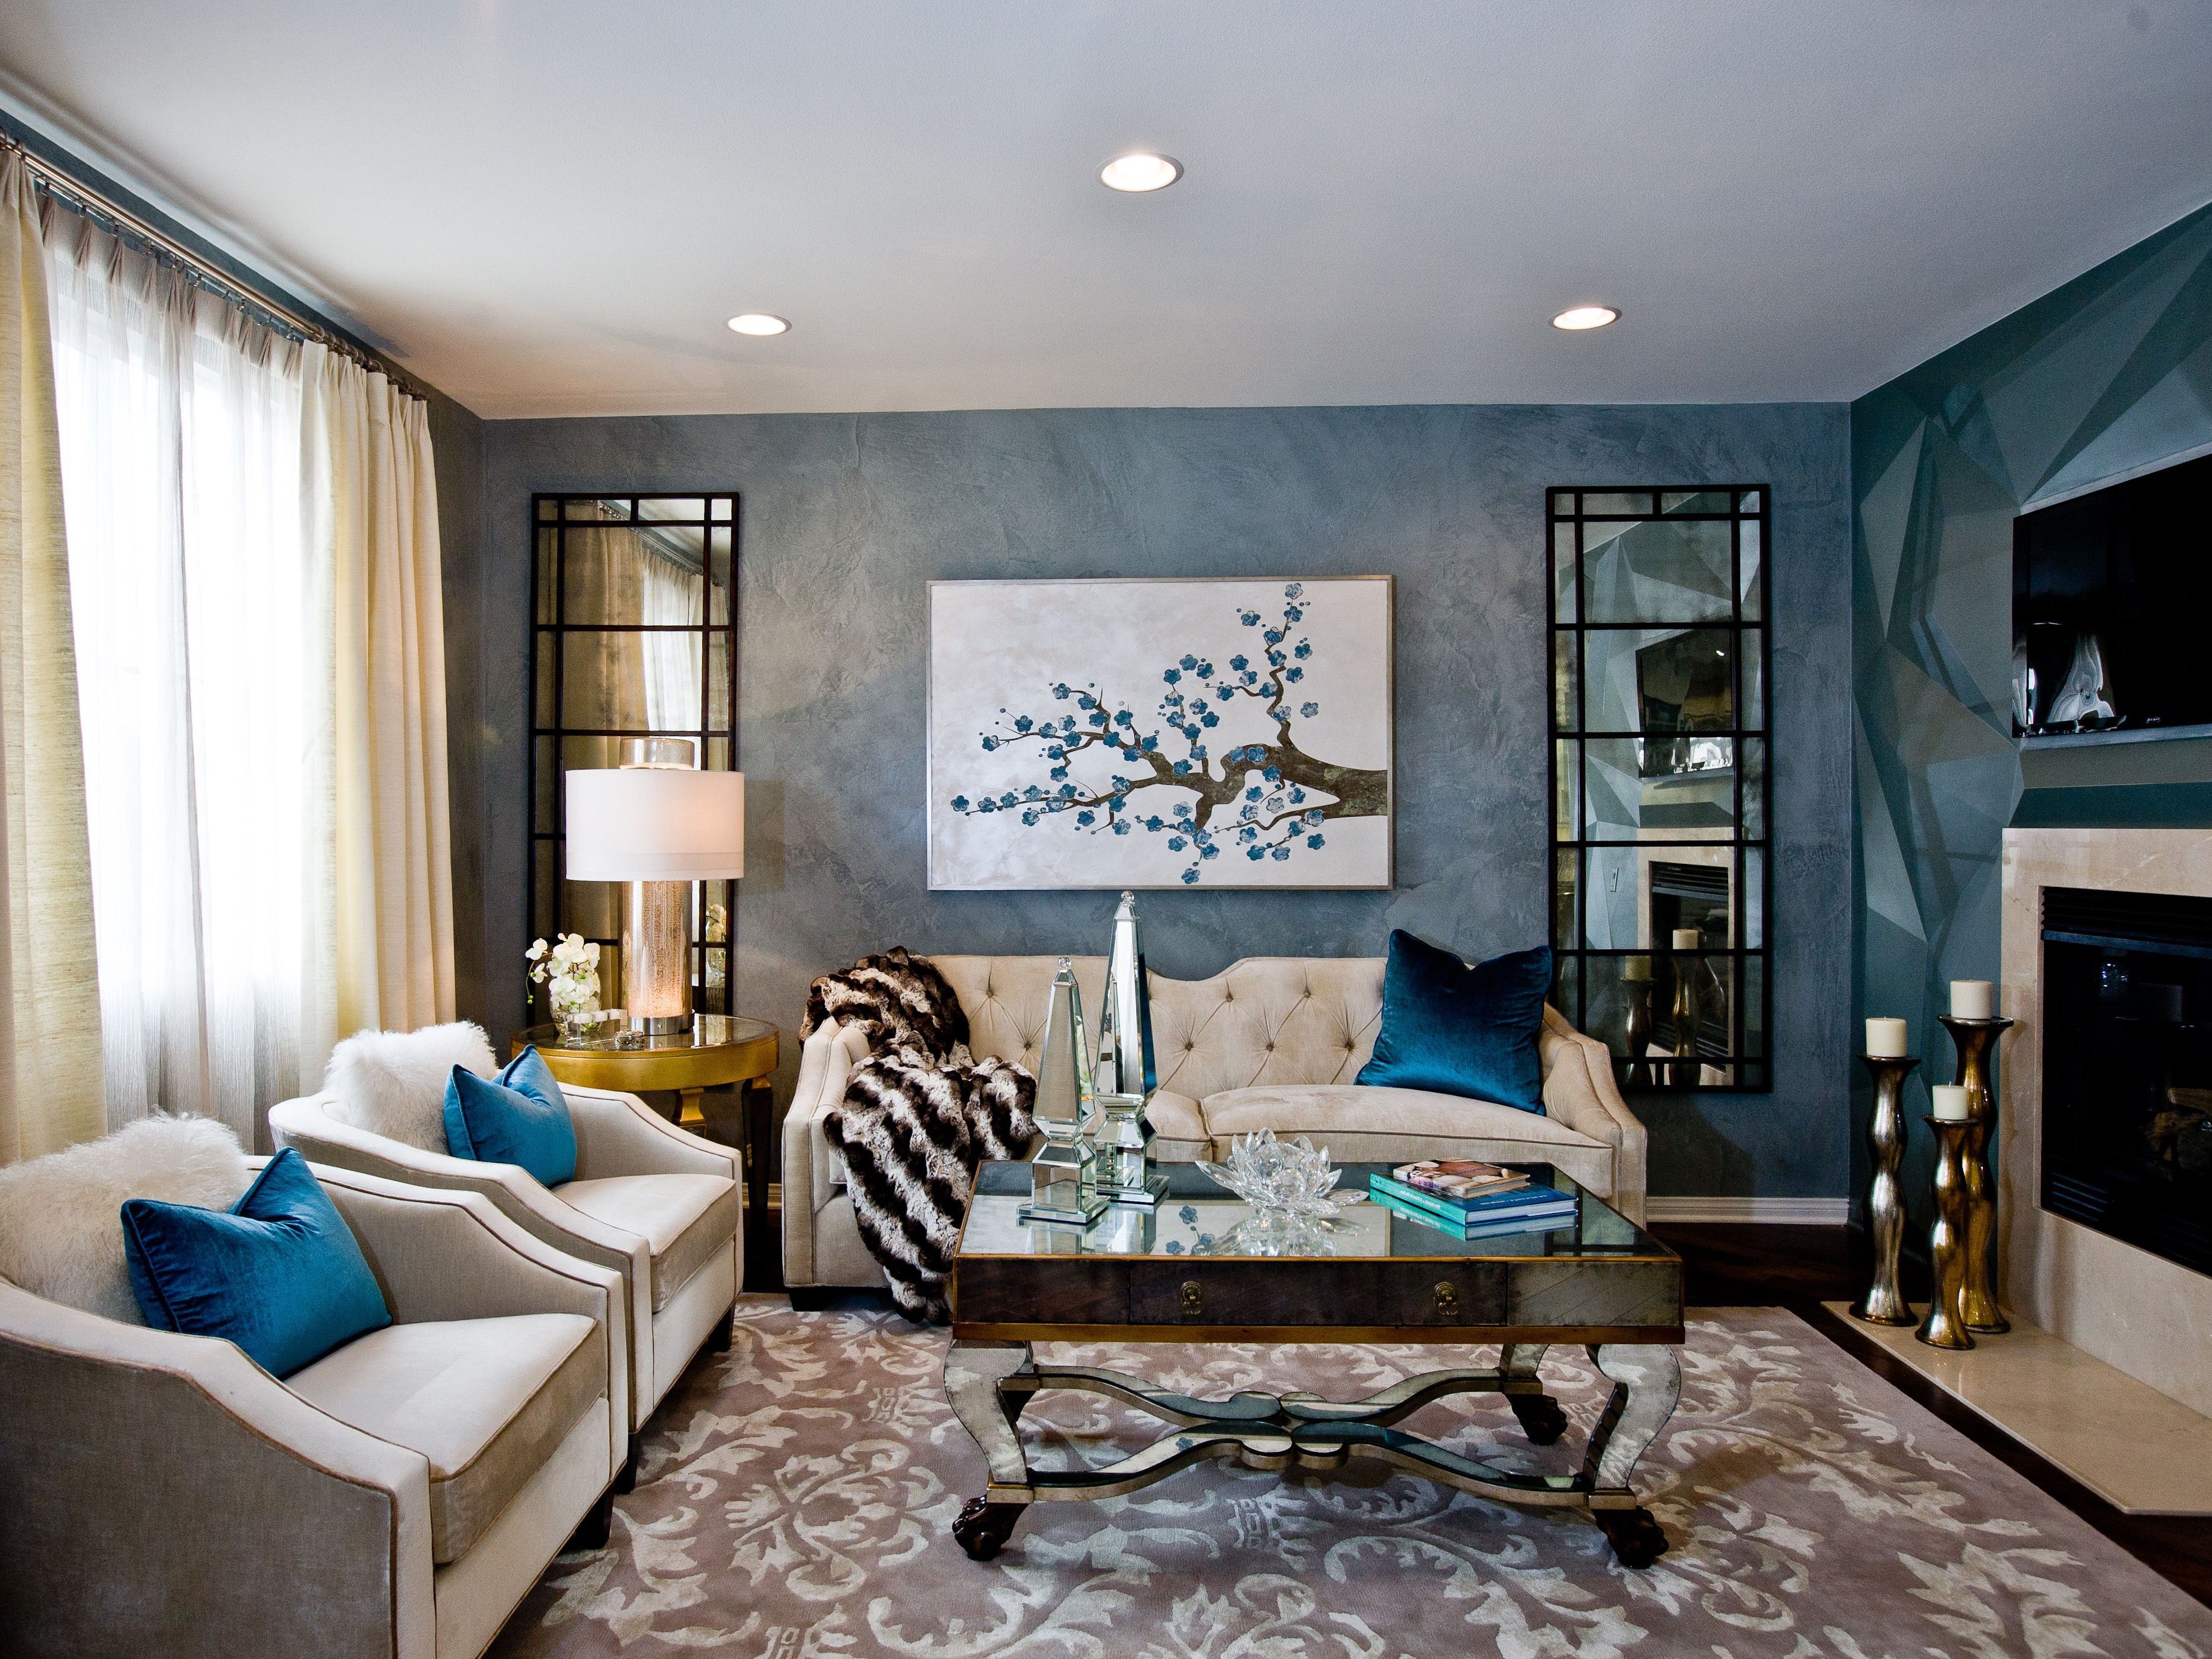 20 Art Deco-Inspired Living Room Design And Ideas #18354 | Living Room Ideas